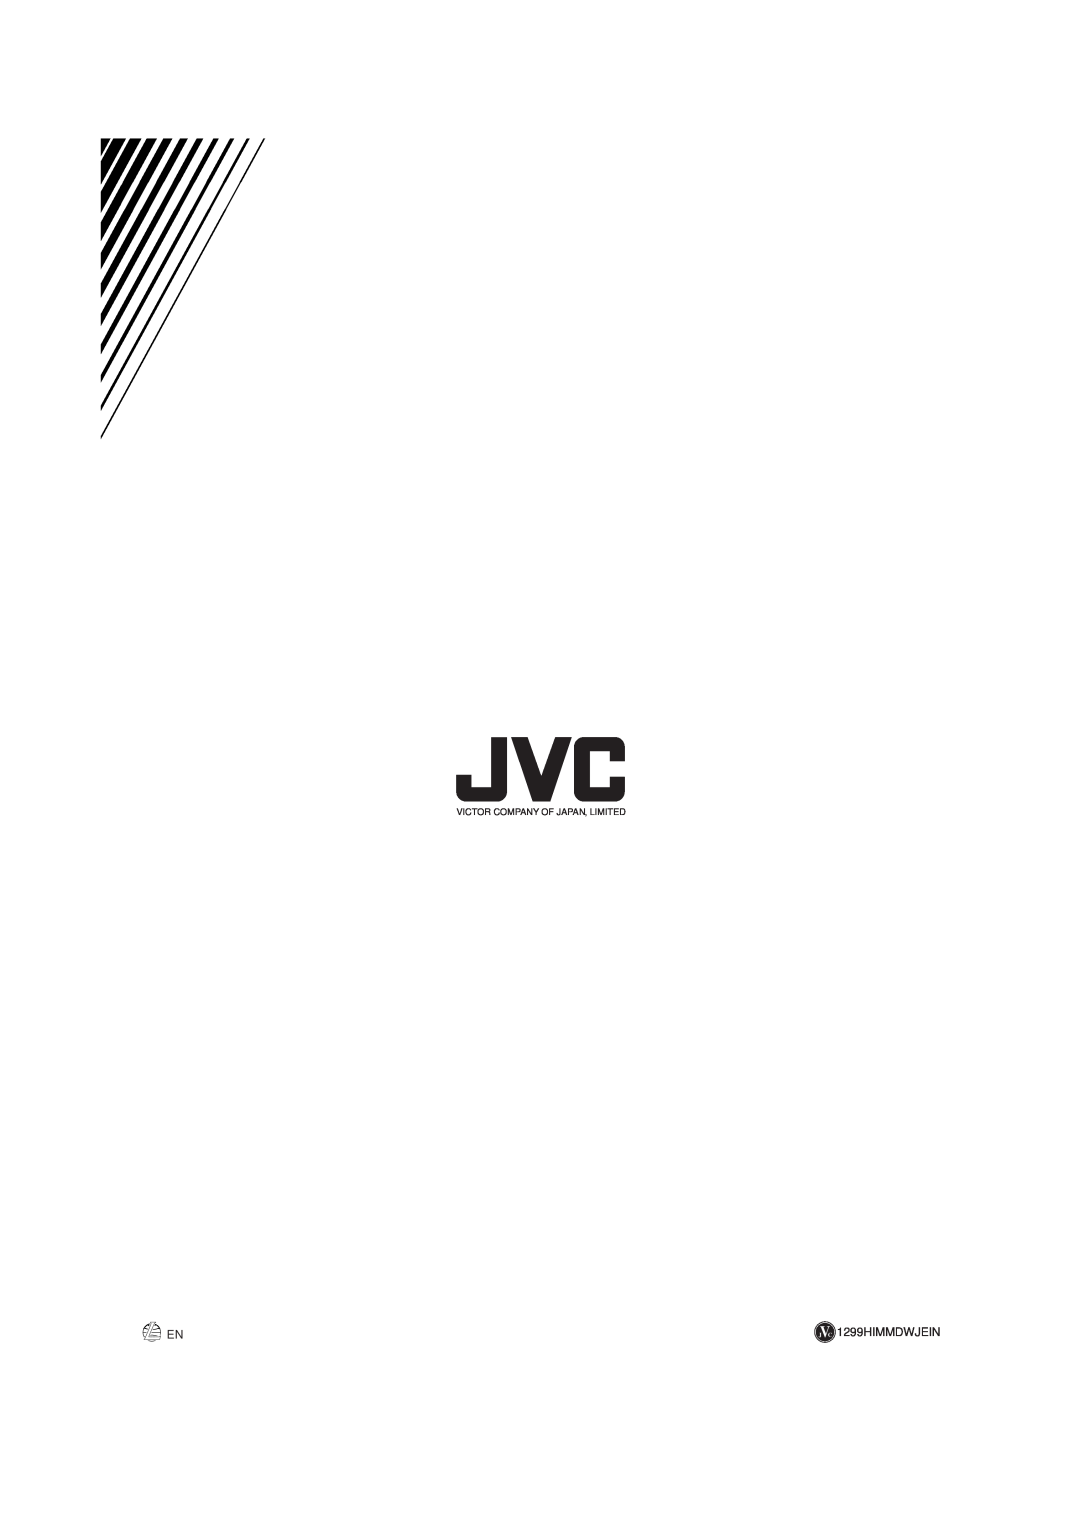 JVC RX-5000VBK manual J C 1299HIMMDWJEIN, Victor Company Of Japan, Limited 